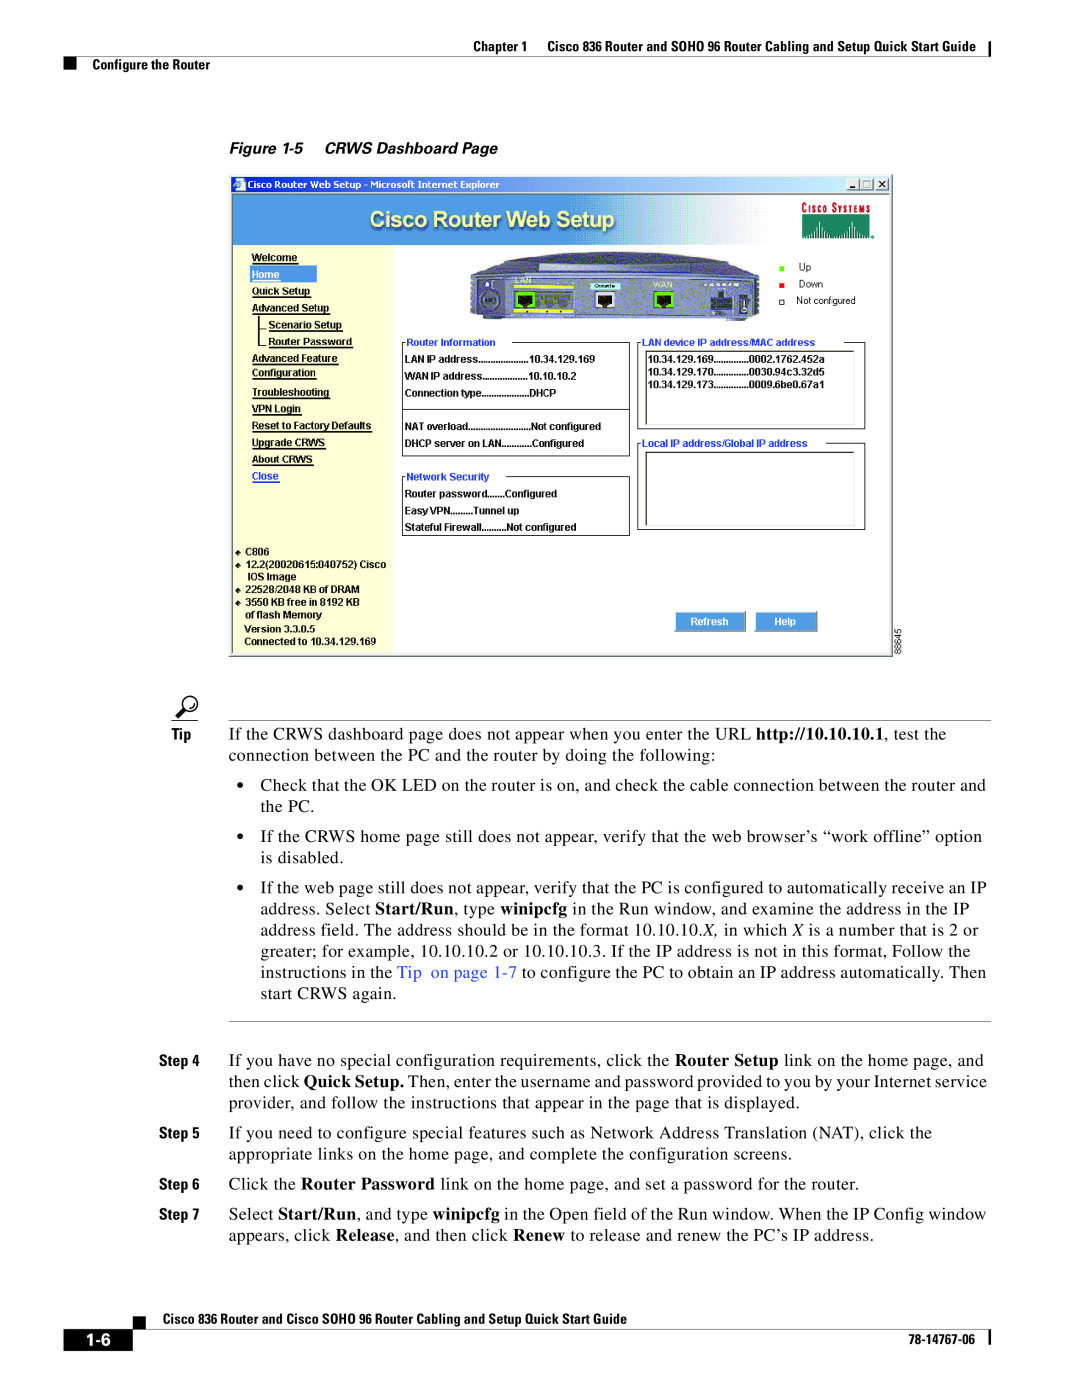 Cisco Systems SOHO 96 quick start 5 CRWS Dashboard Page 